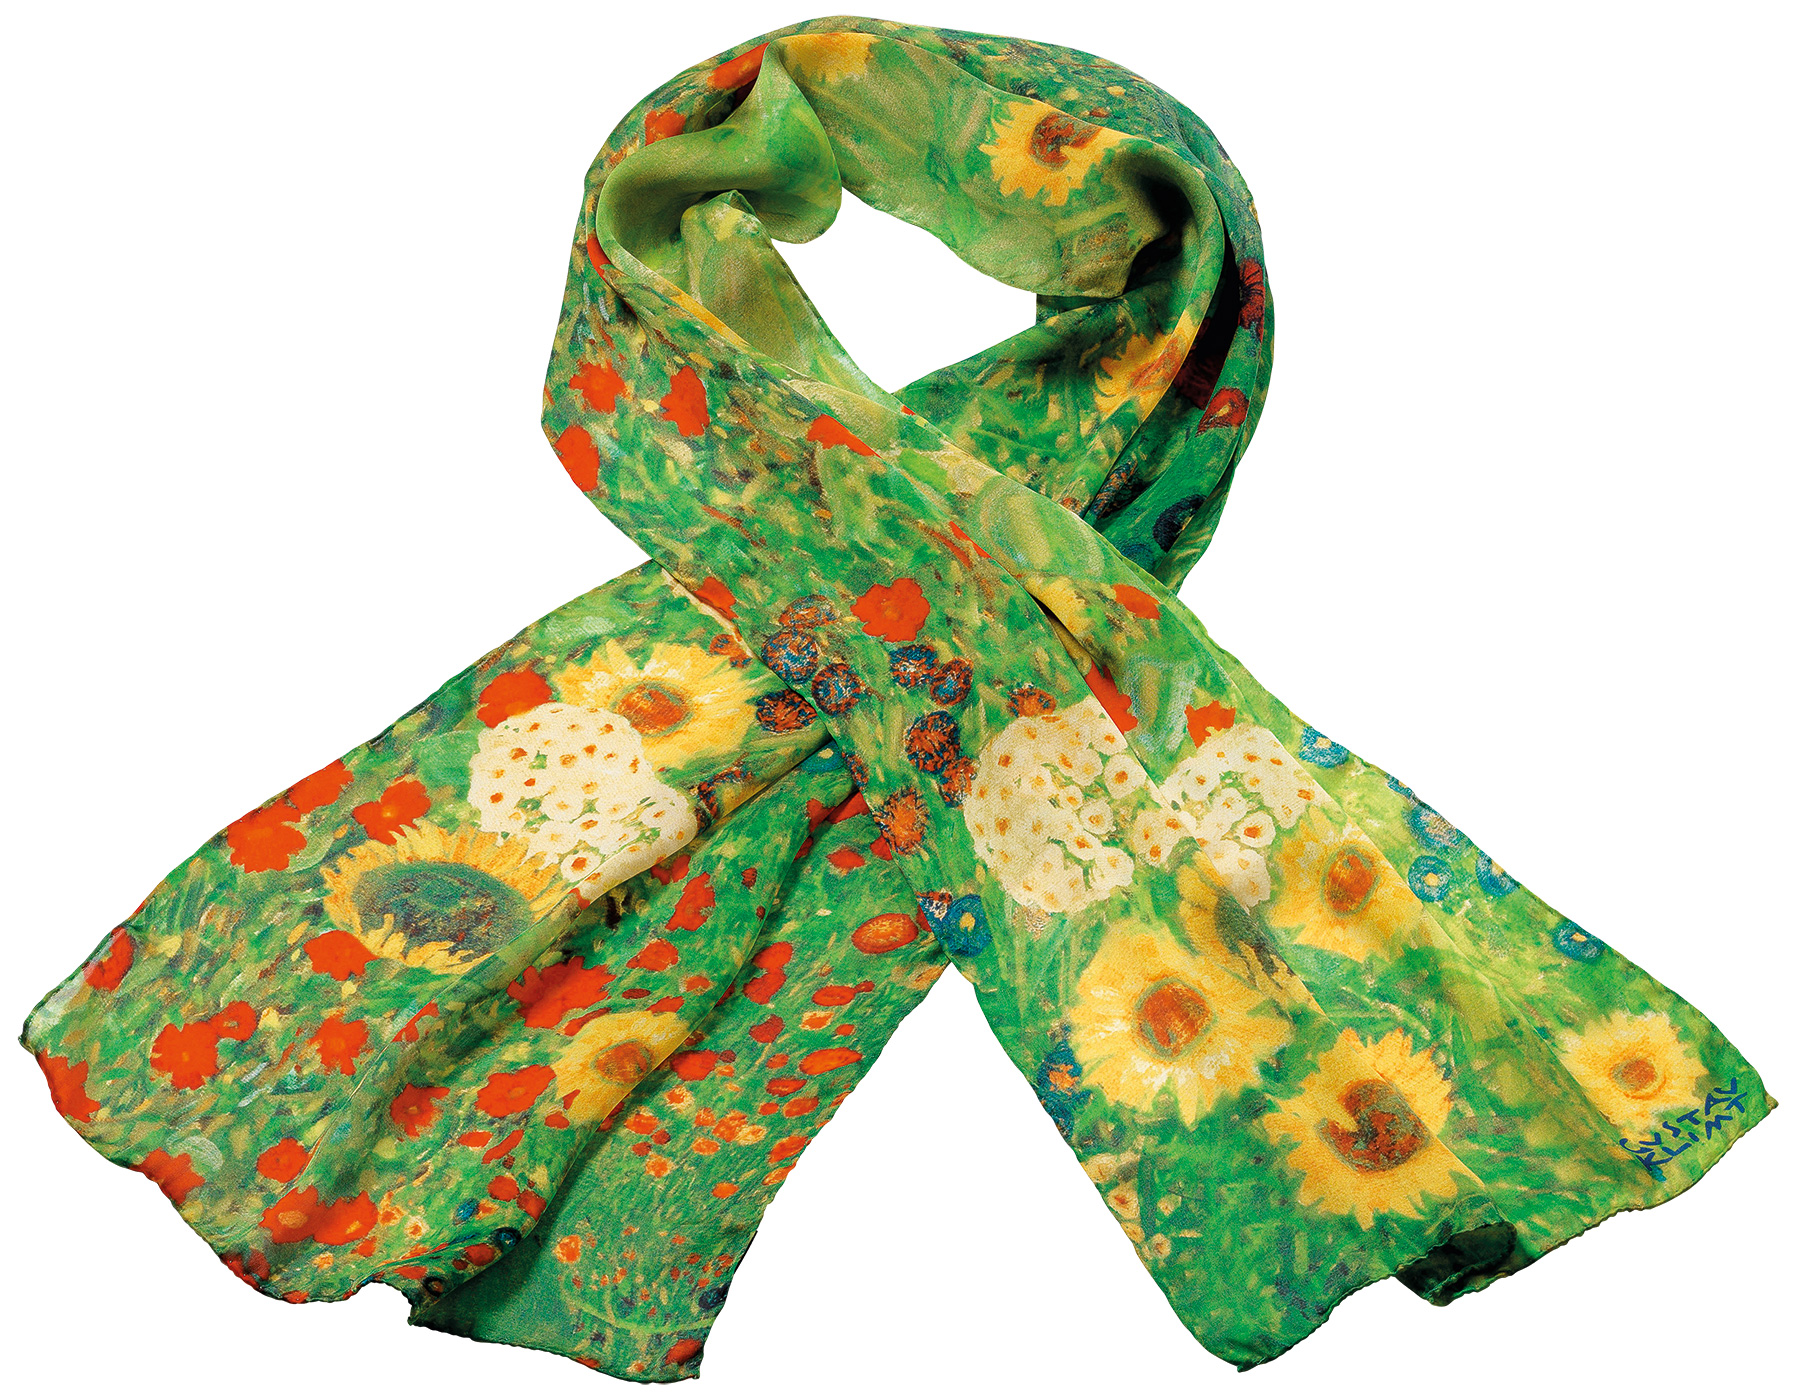 Silk scarf "Farmer's Garden with Sunflowers" by Gustav Klimt